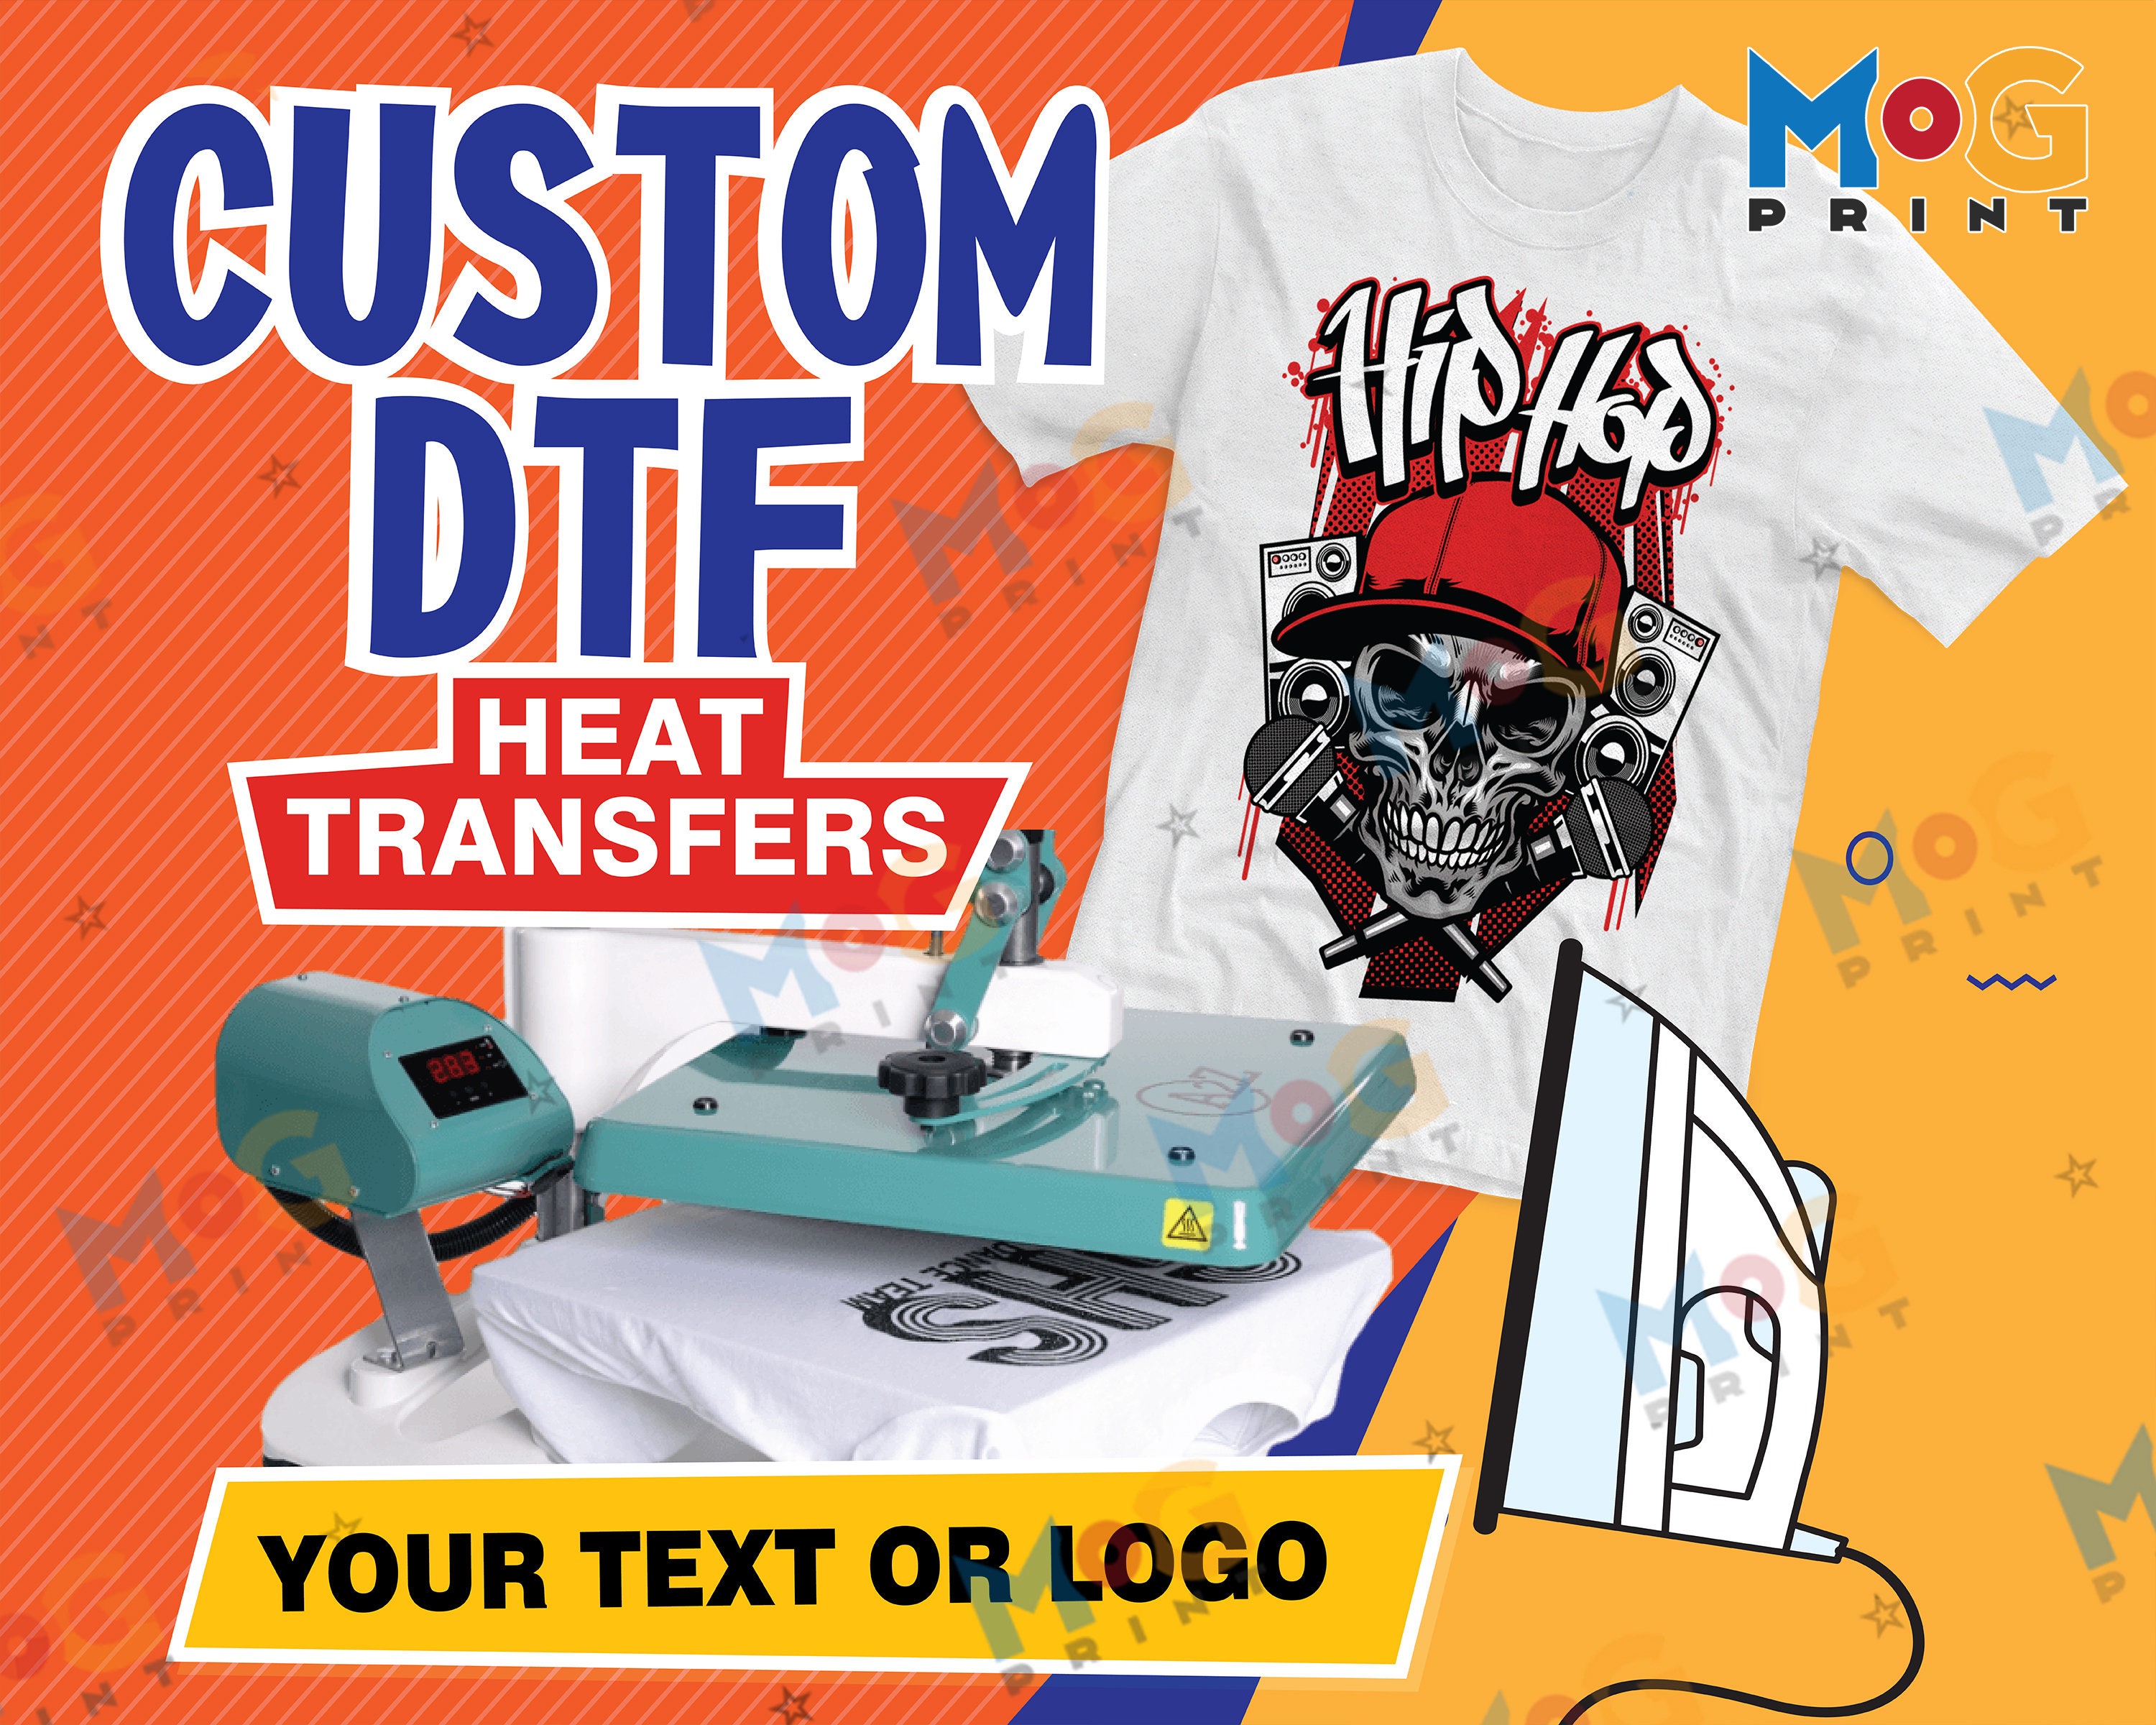 Custom DTF Iron Transfer Printing,DIY Photo/Logo/Letter/Text Heat Iron on  Transfer, Personalized Heat Transfer Automotive Decals Stickers Uniform